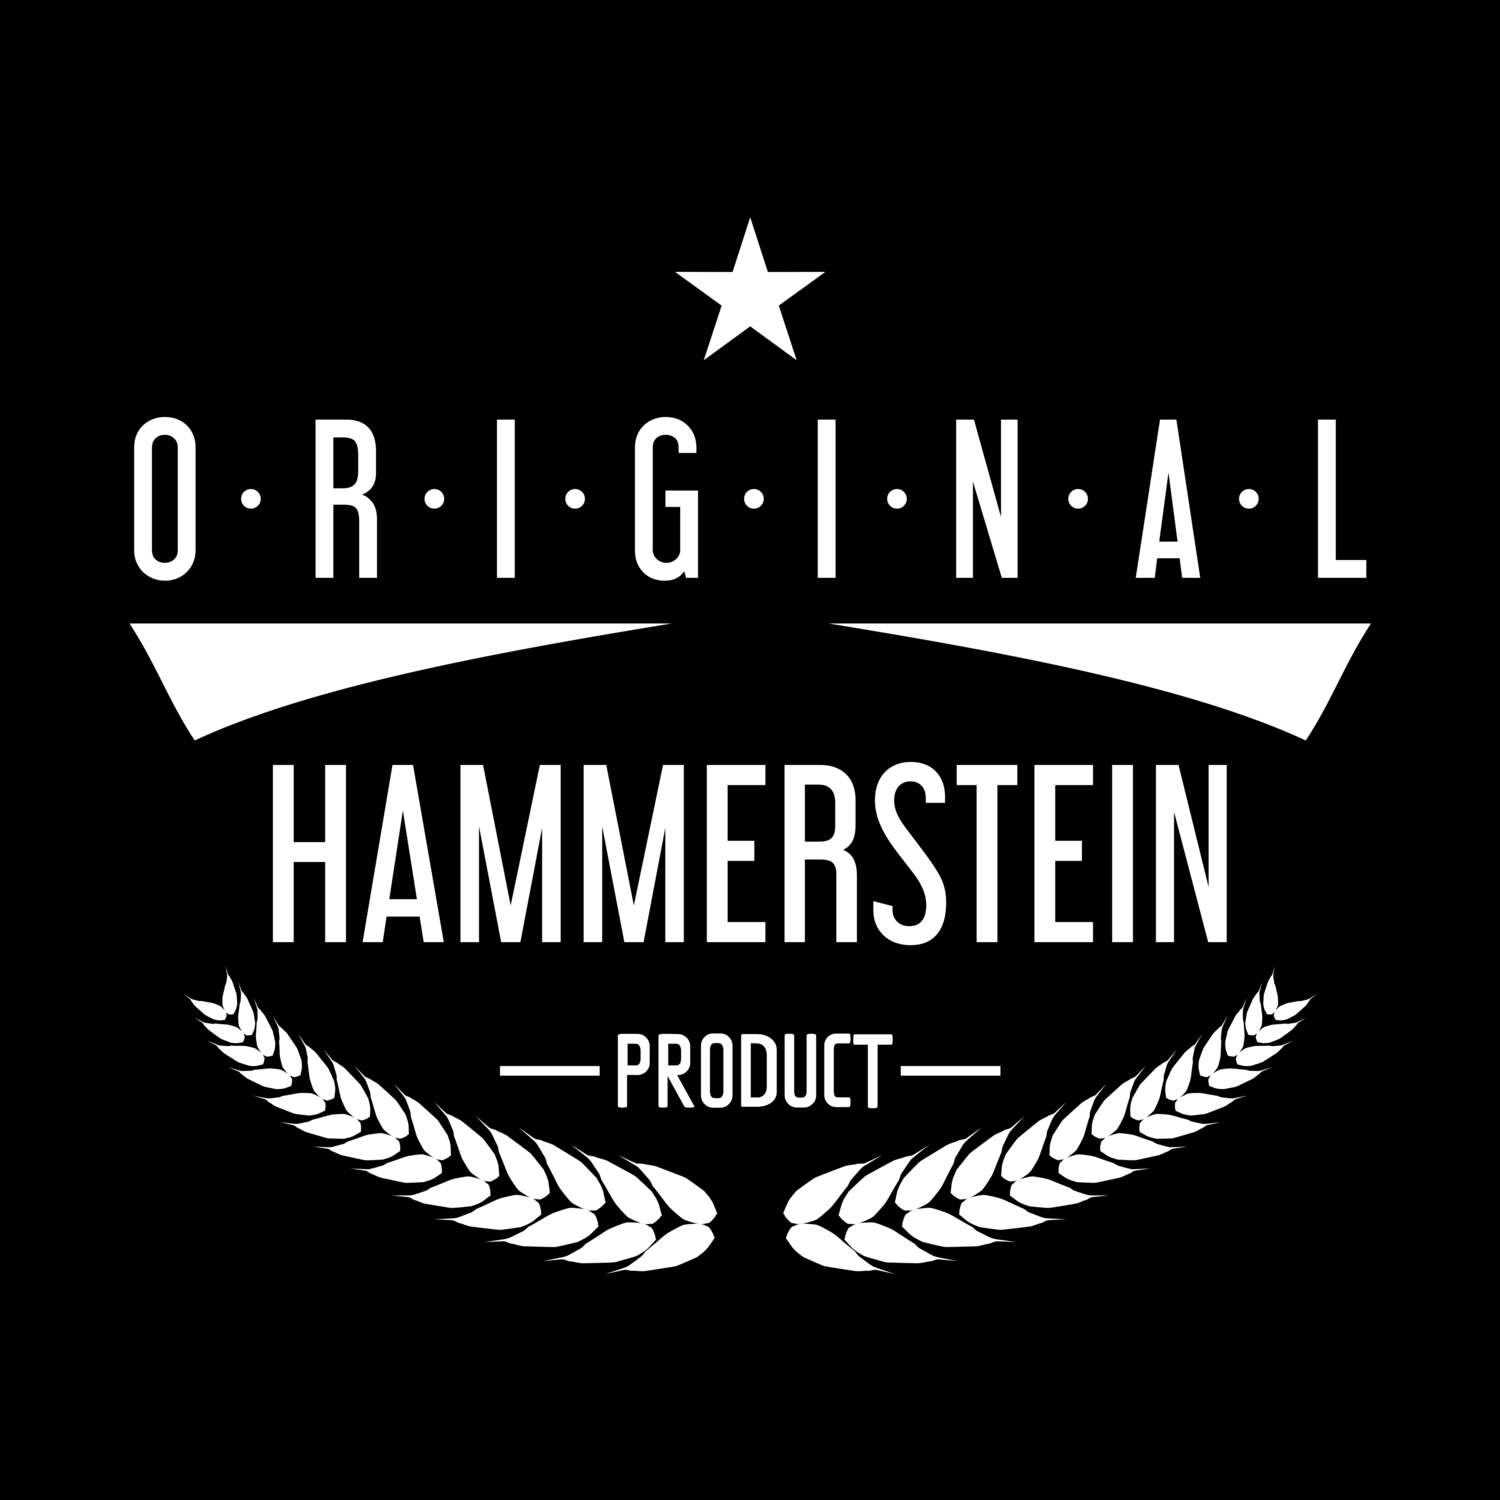 Hammerstein T-Shirt »Original Product«